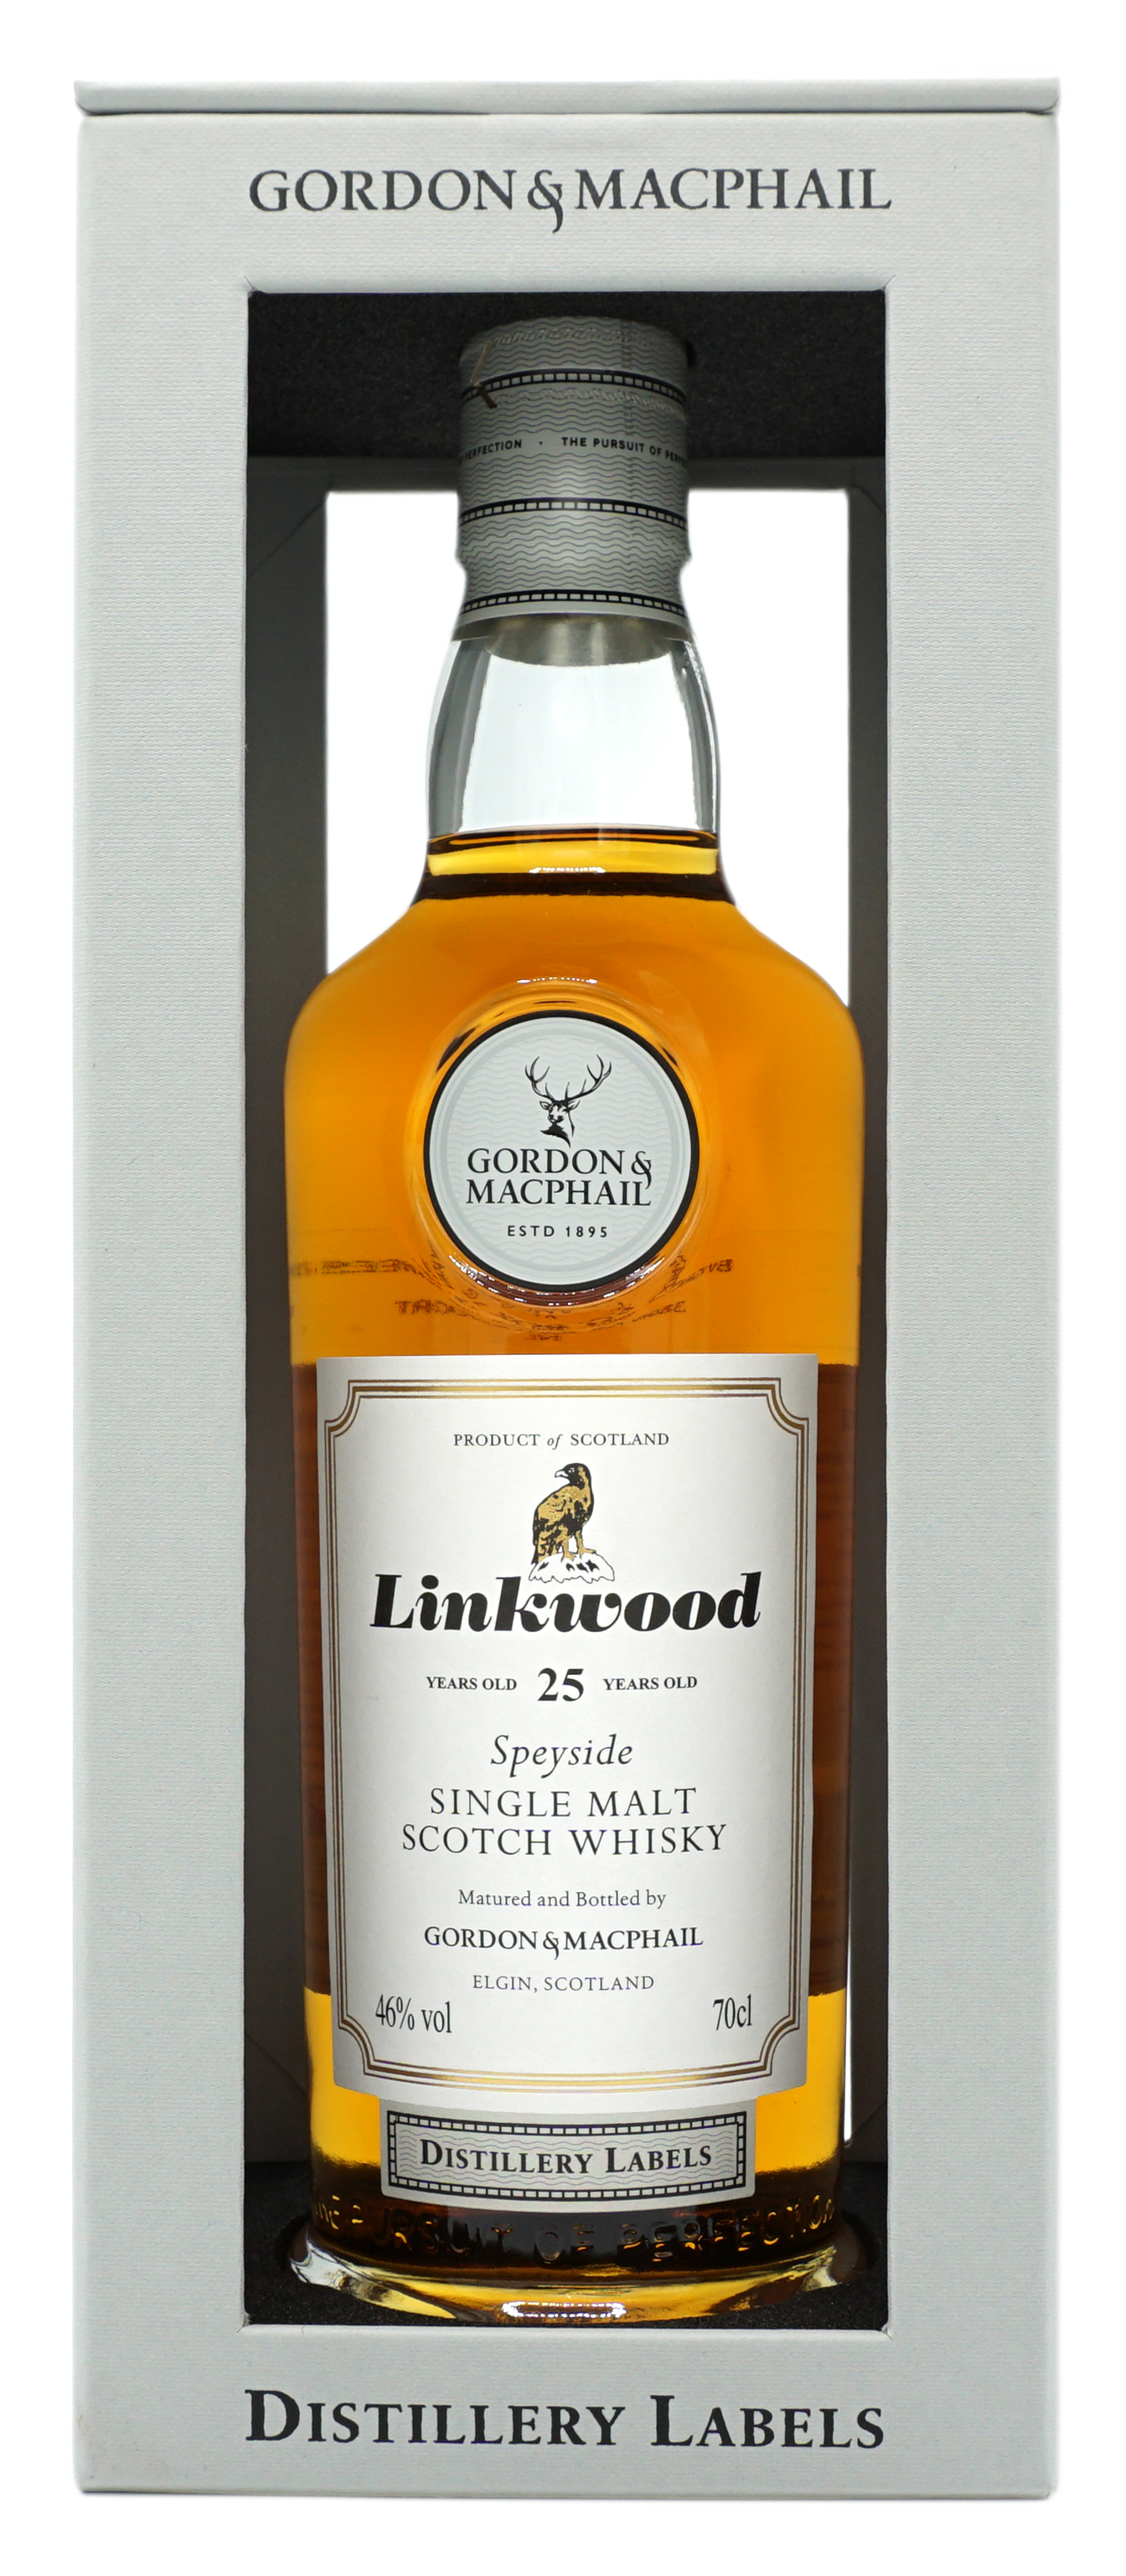 Gordon&MacPhail DistilleryLabels Linkwood 25y 46% FlesinDoos